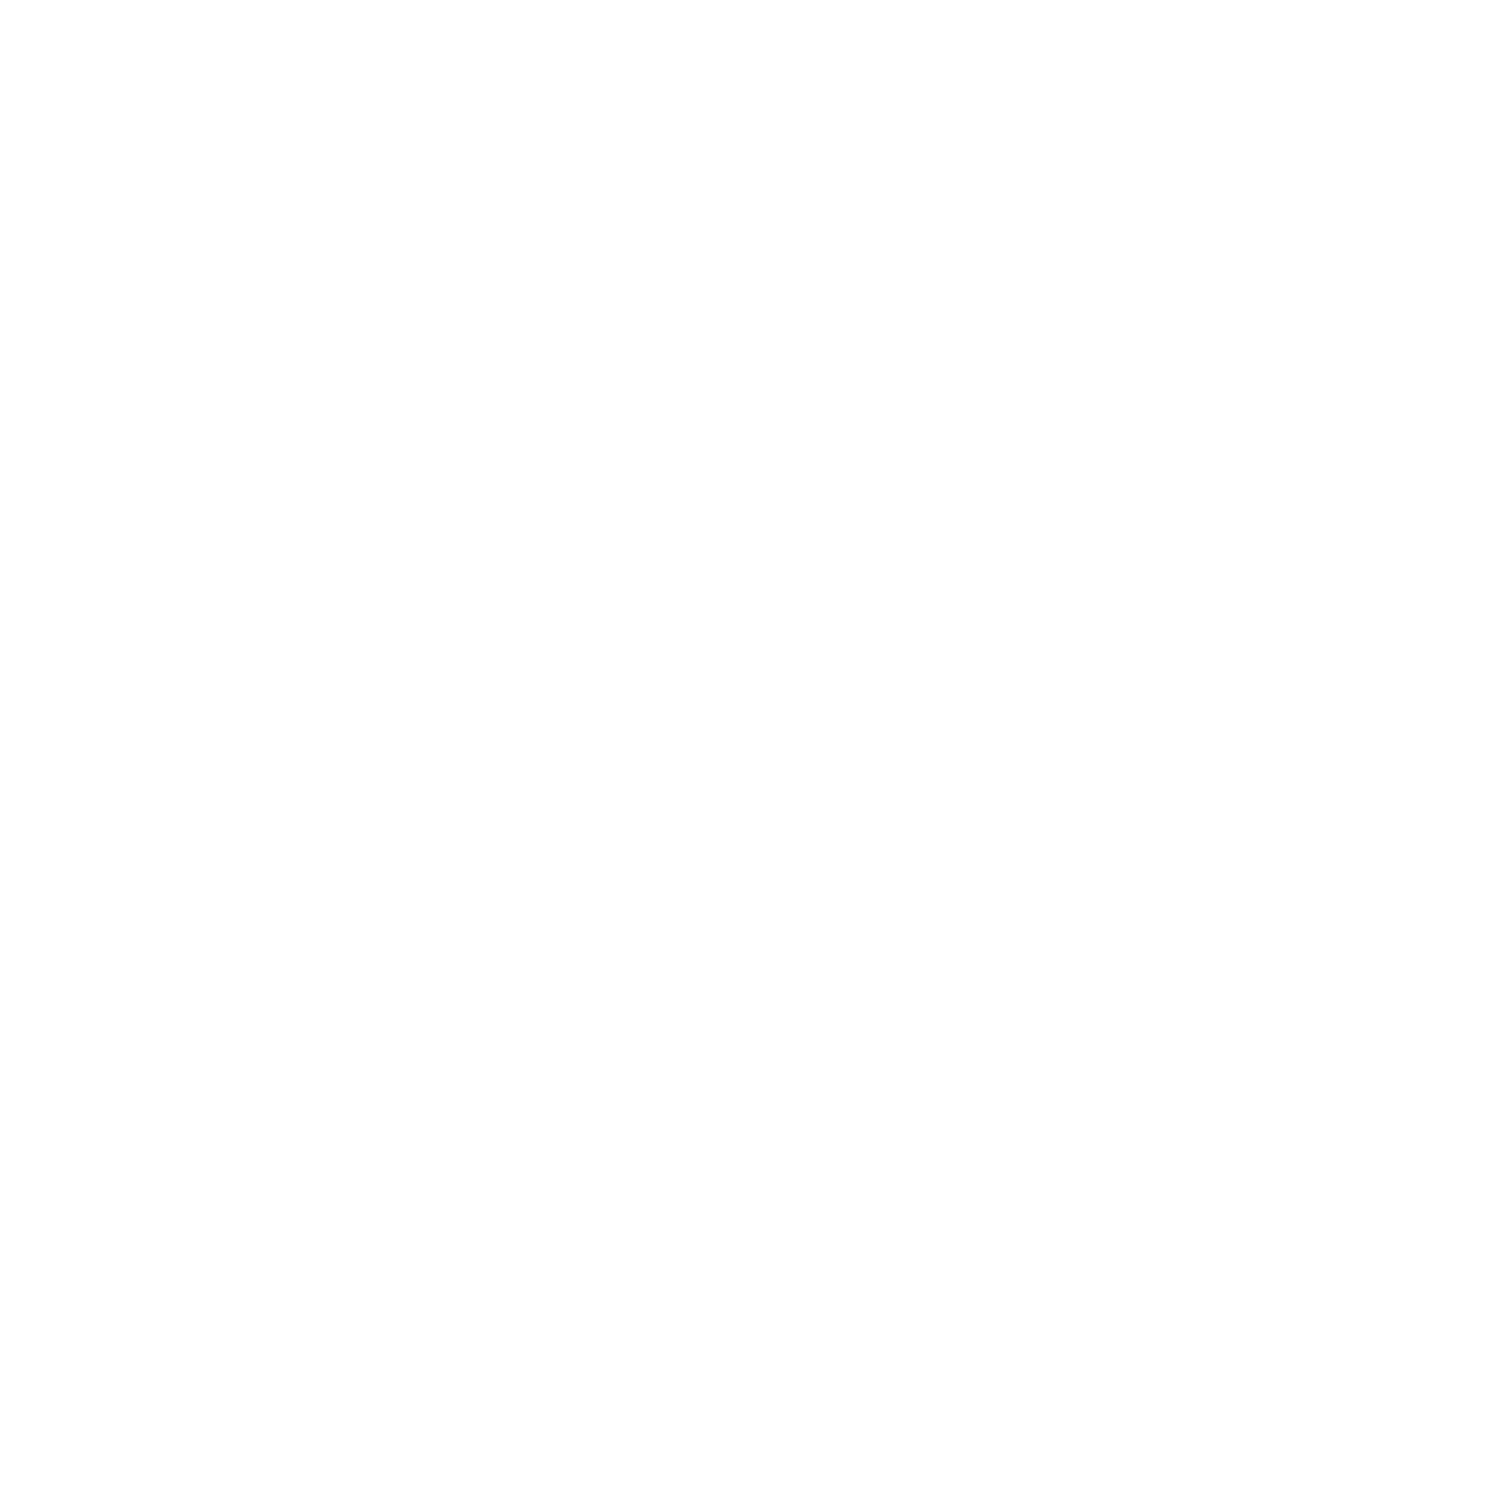 Wellesley Historical Society